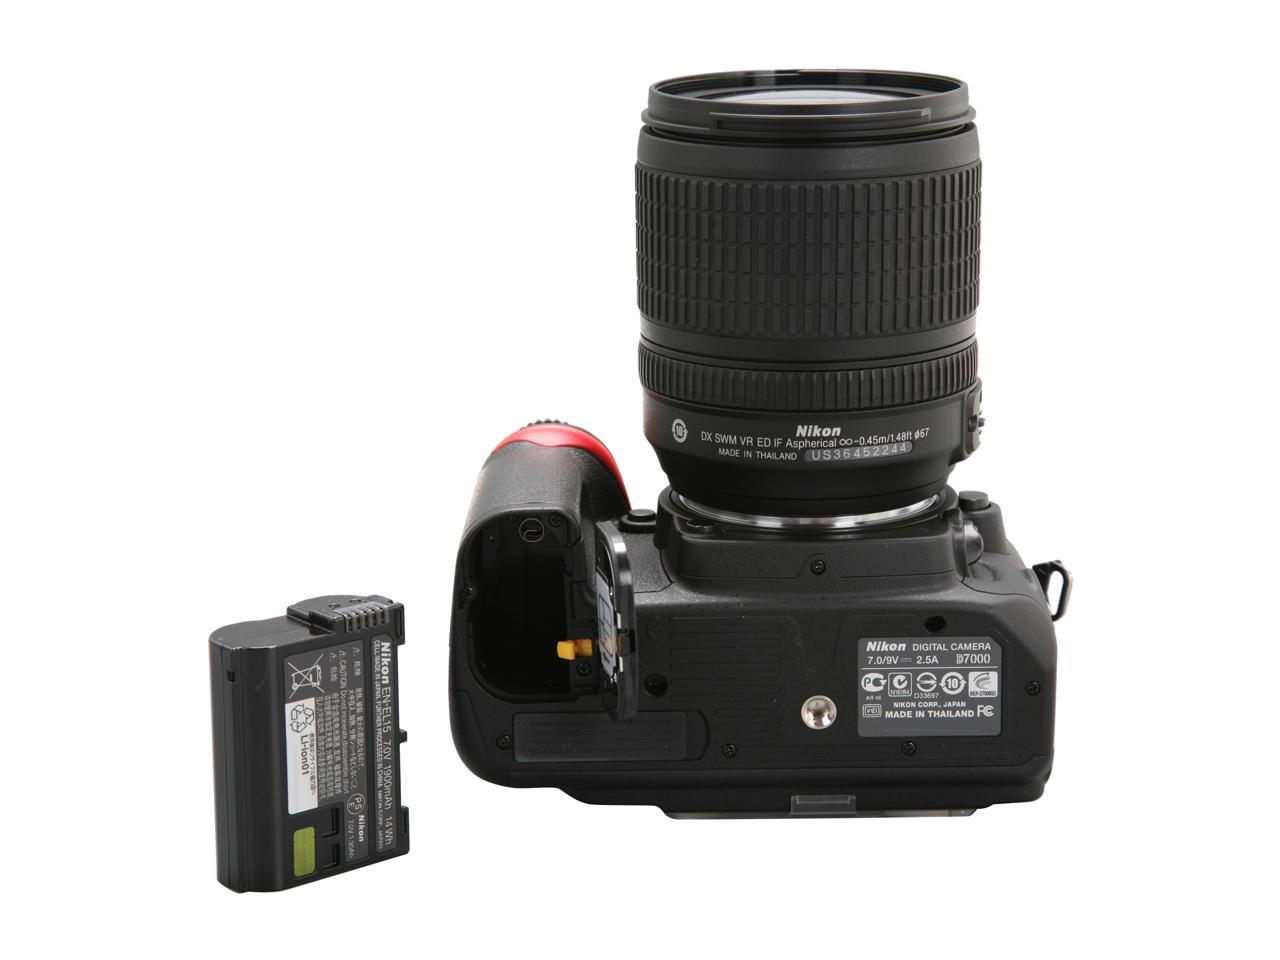 Nikon D7000 16.2MP DX-Format CMOS Digital SLR Camera with 18-105mm f/3.